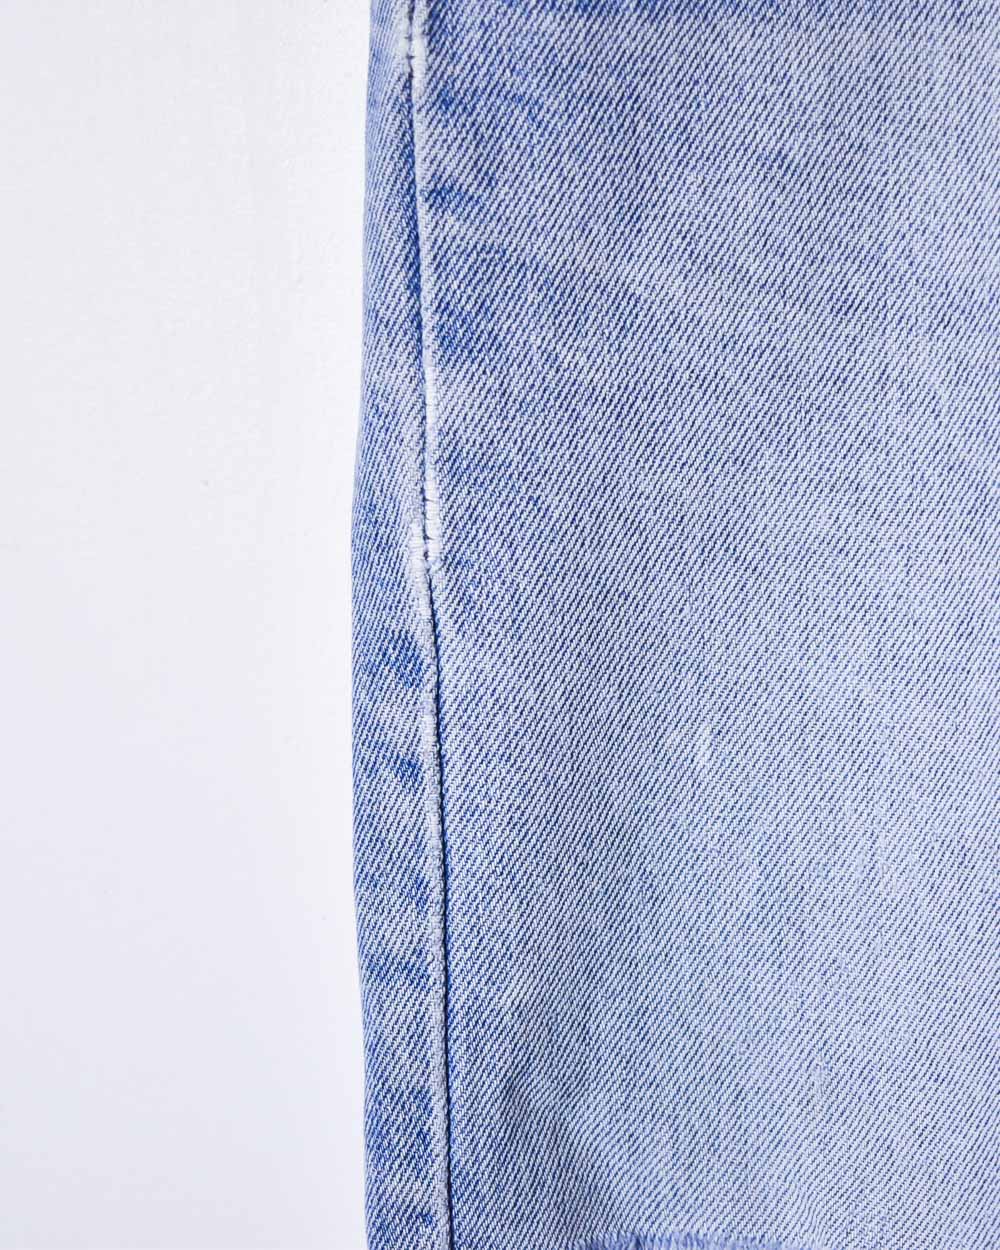 Blue Lee Raw Hem Cut Off Denim Shorts - W30